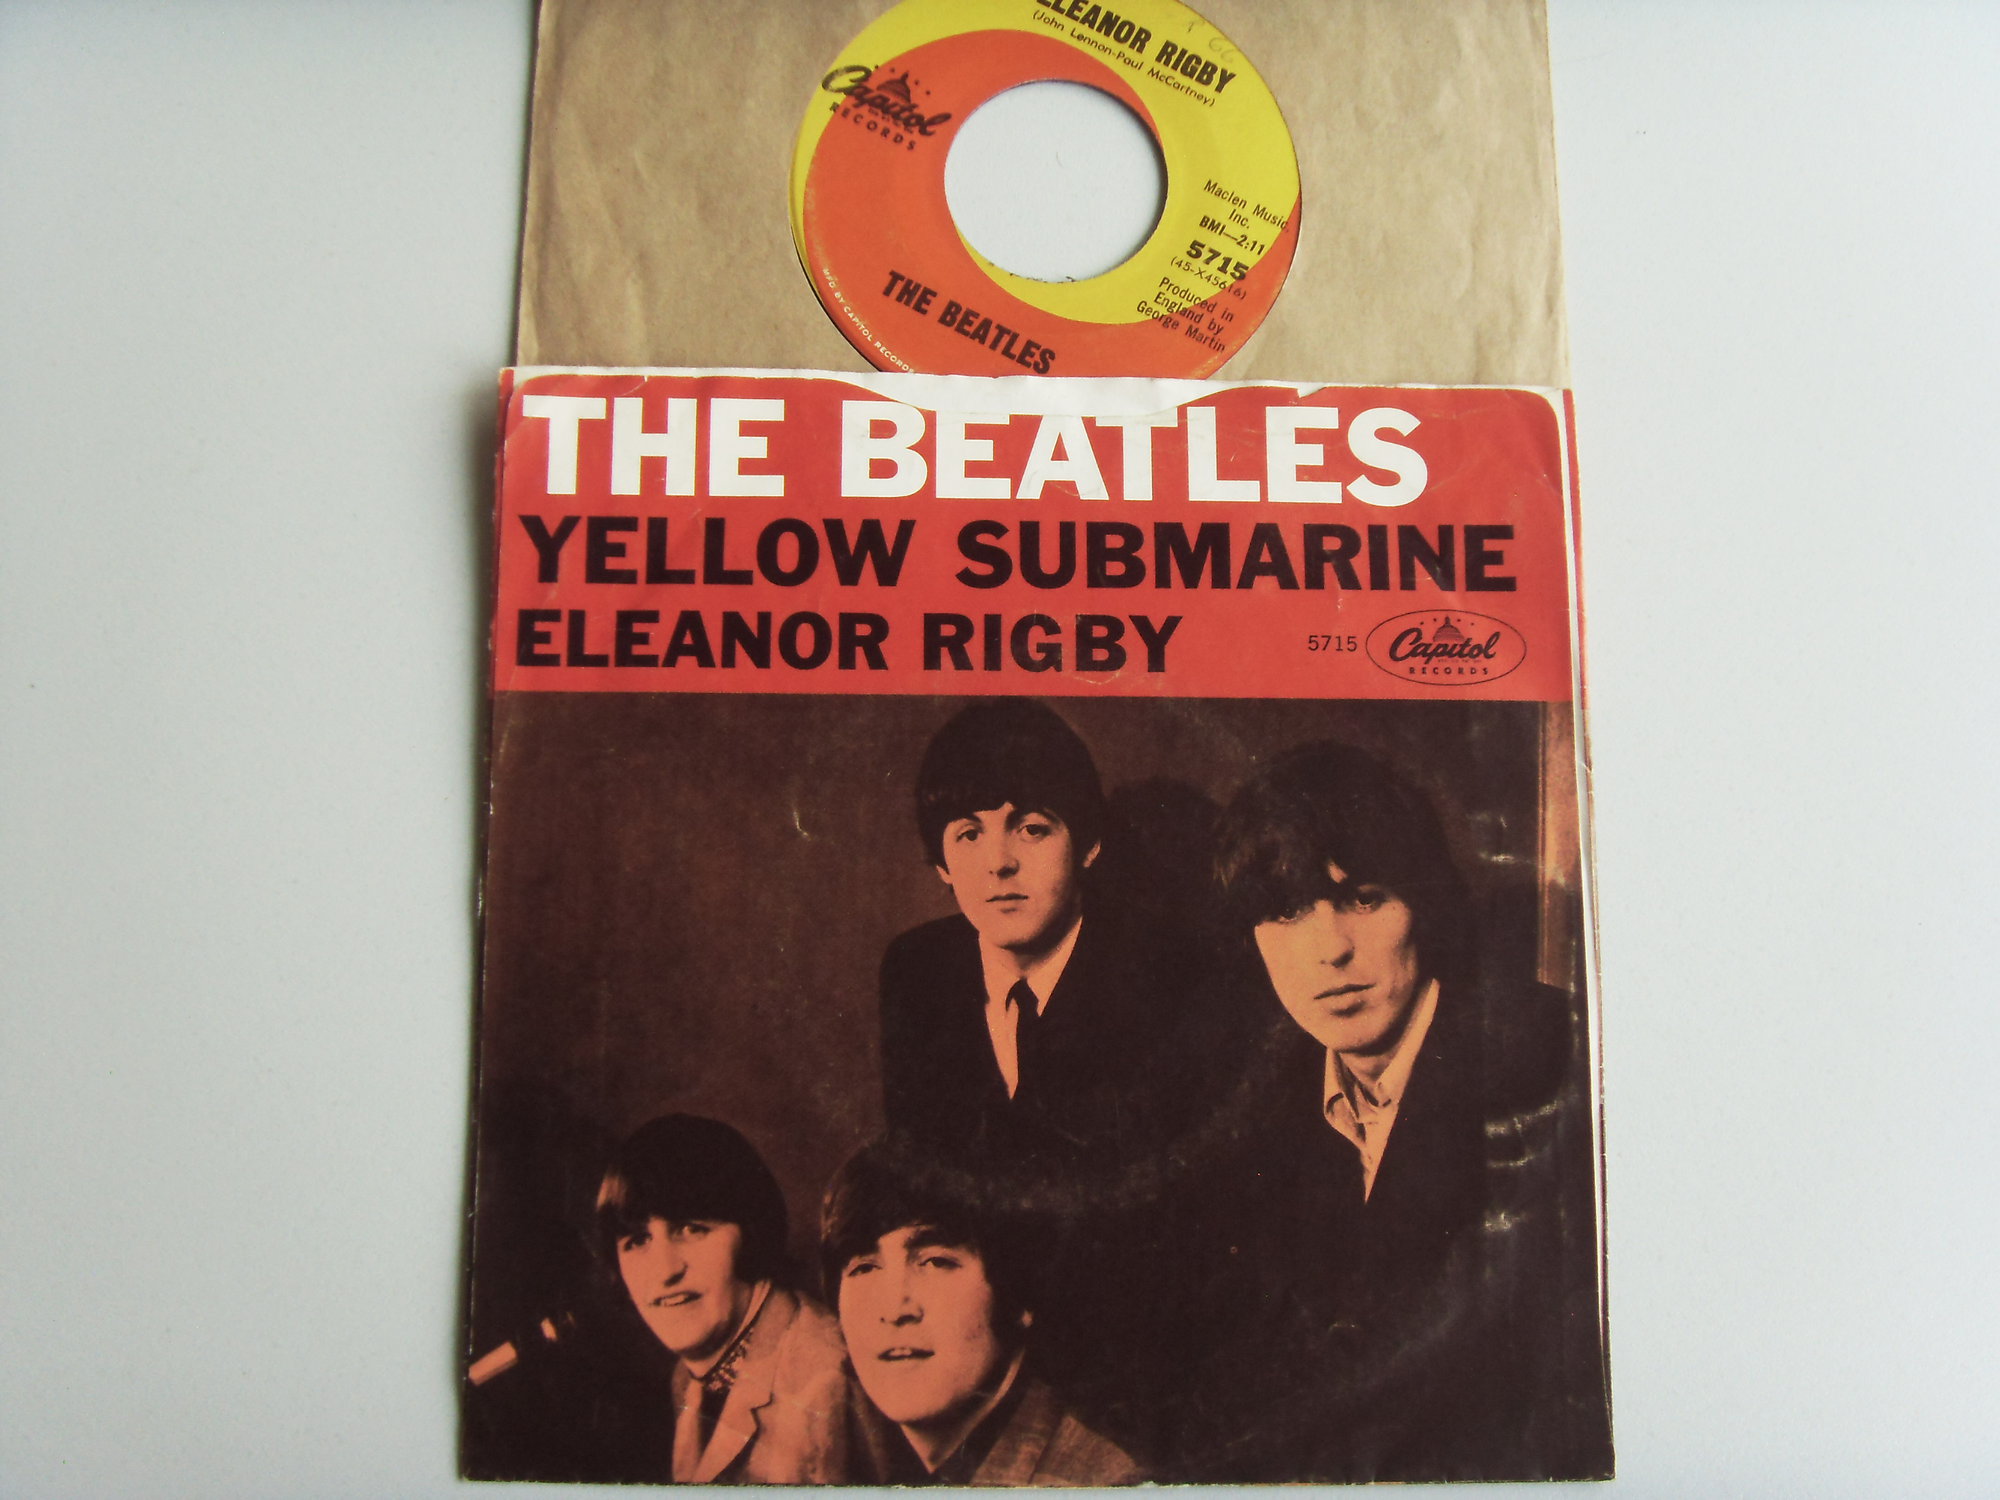 THE BEATLES Yellow Submarine / Eleanor Rigby 2